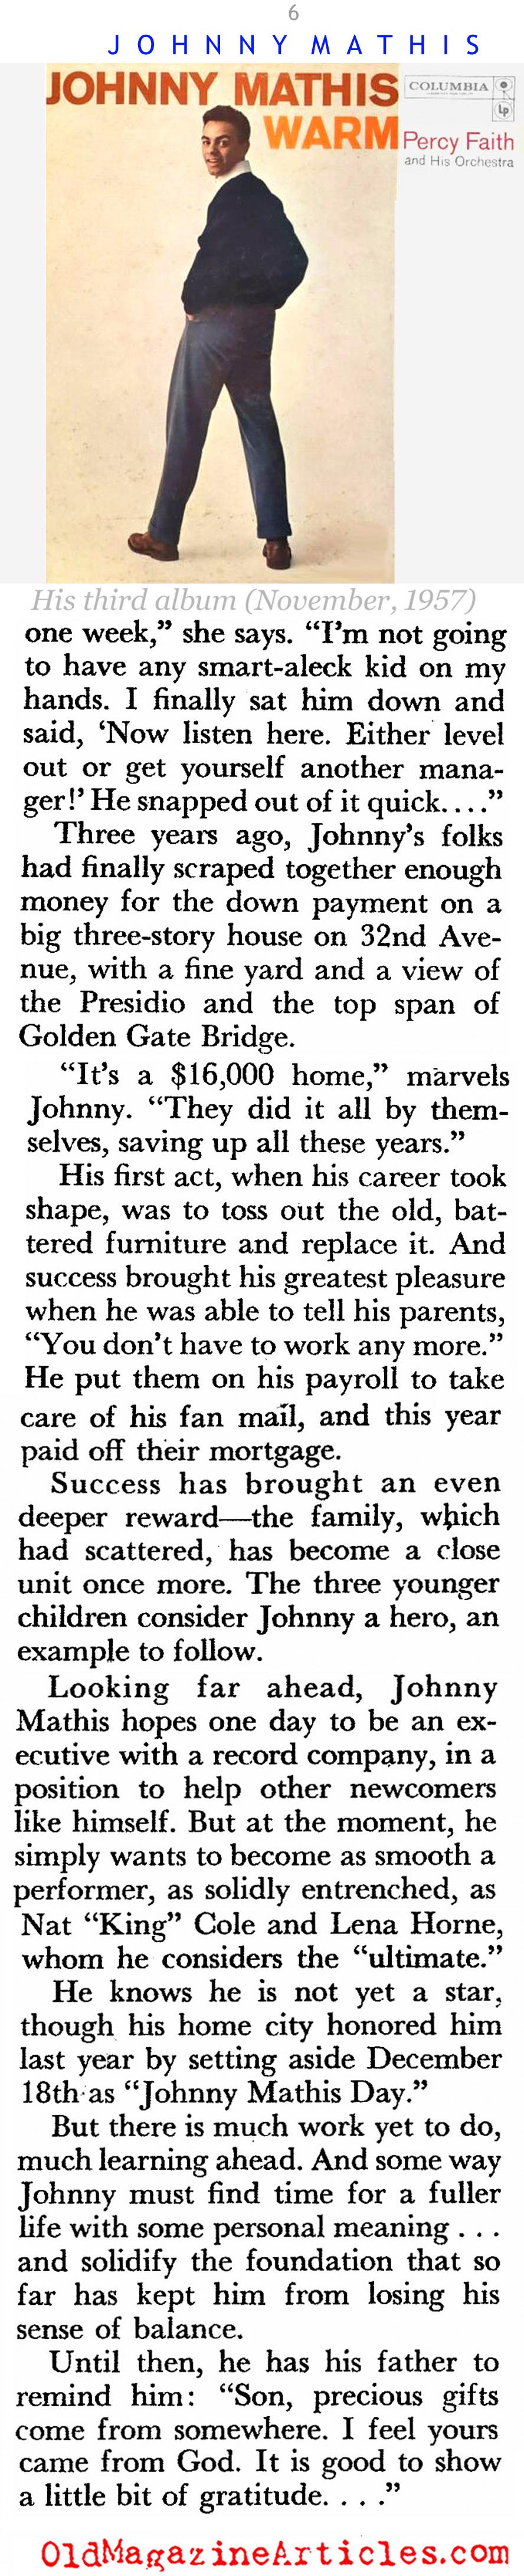 Johnny Mathis (Coronet Magazine, 1957)